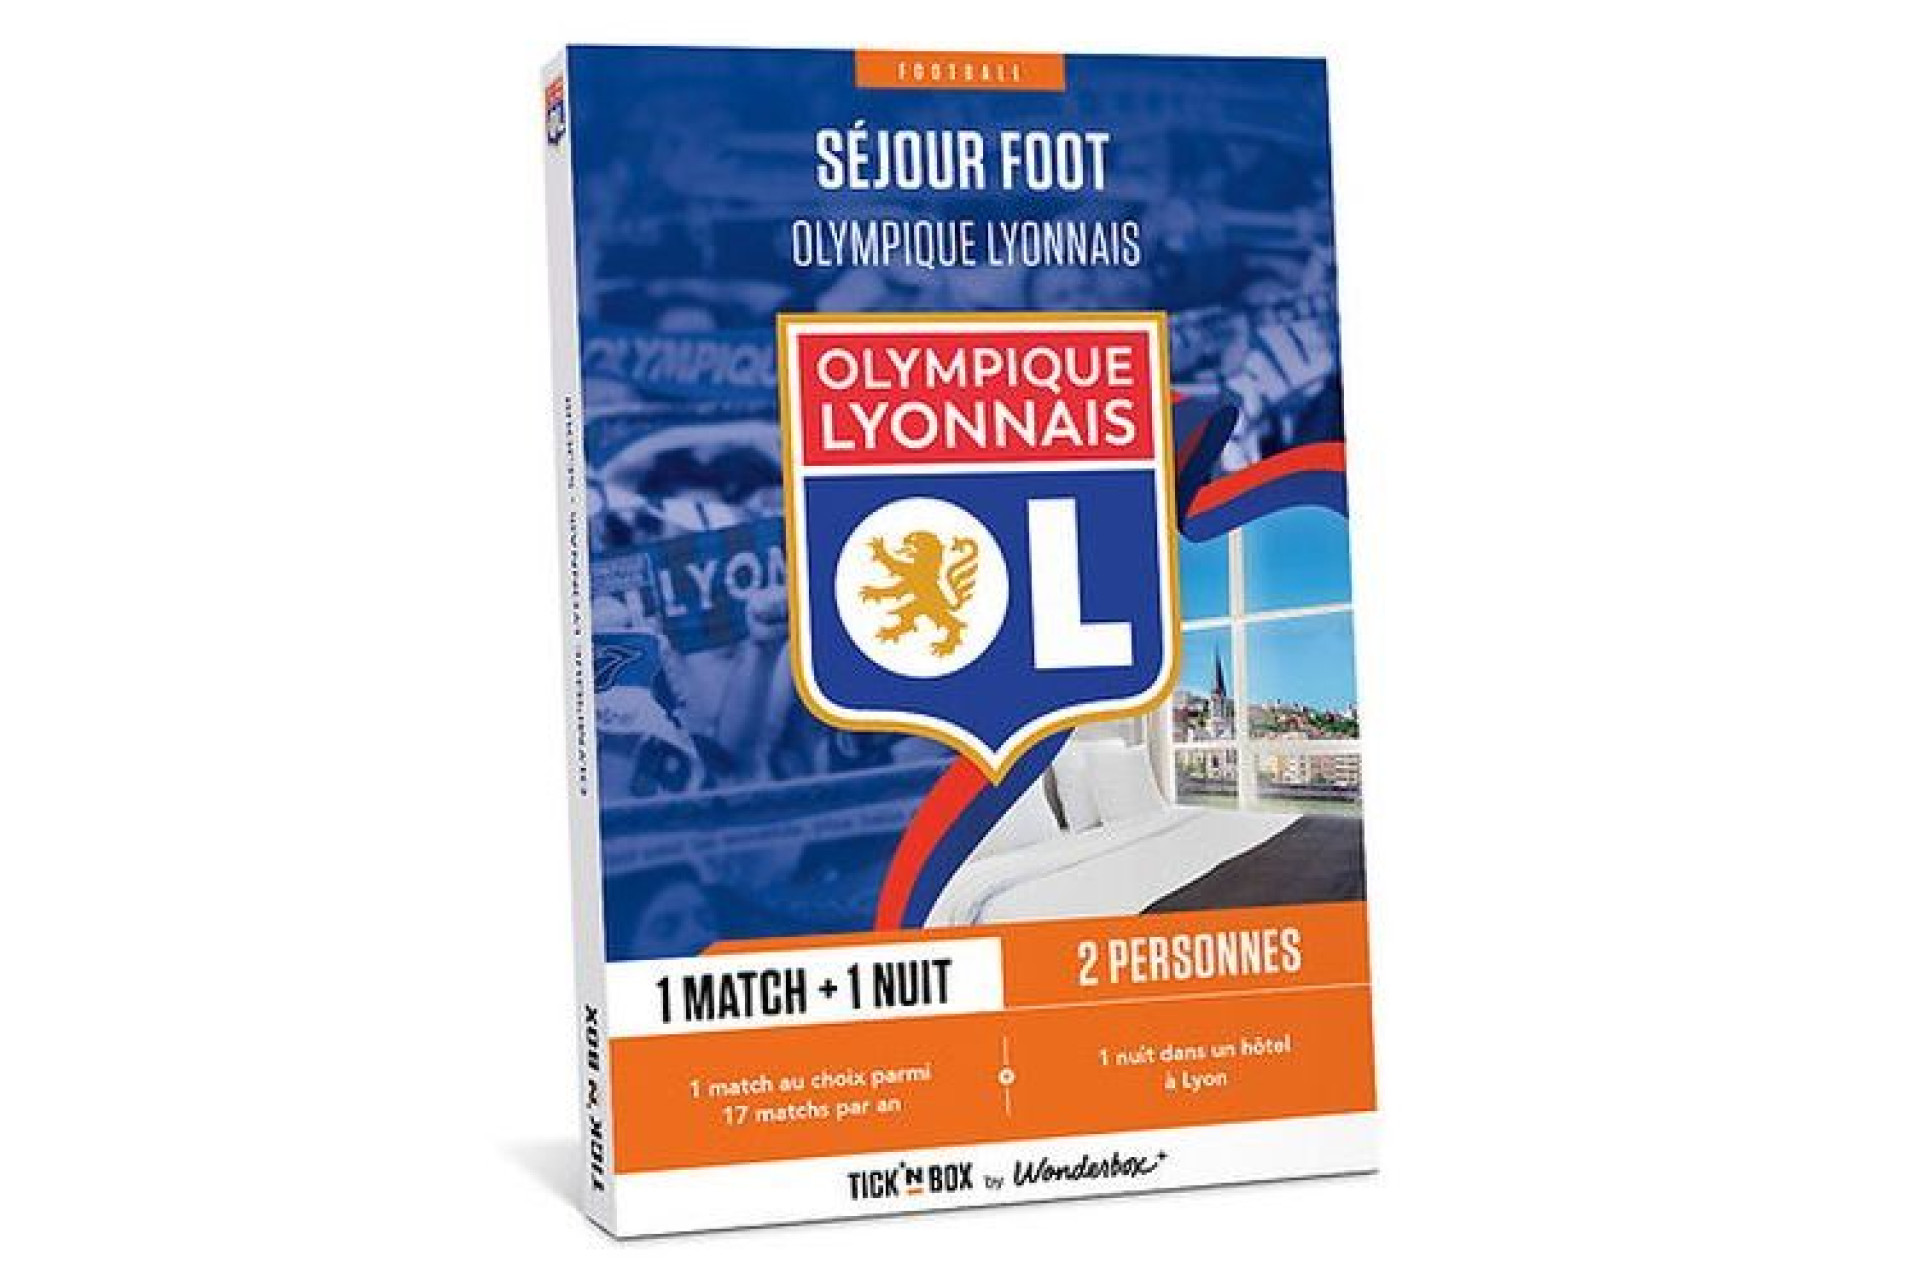 Acheter Coffret cadeau Tick'nBox Olympique Lyonnais Séjour